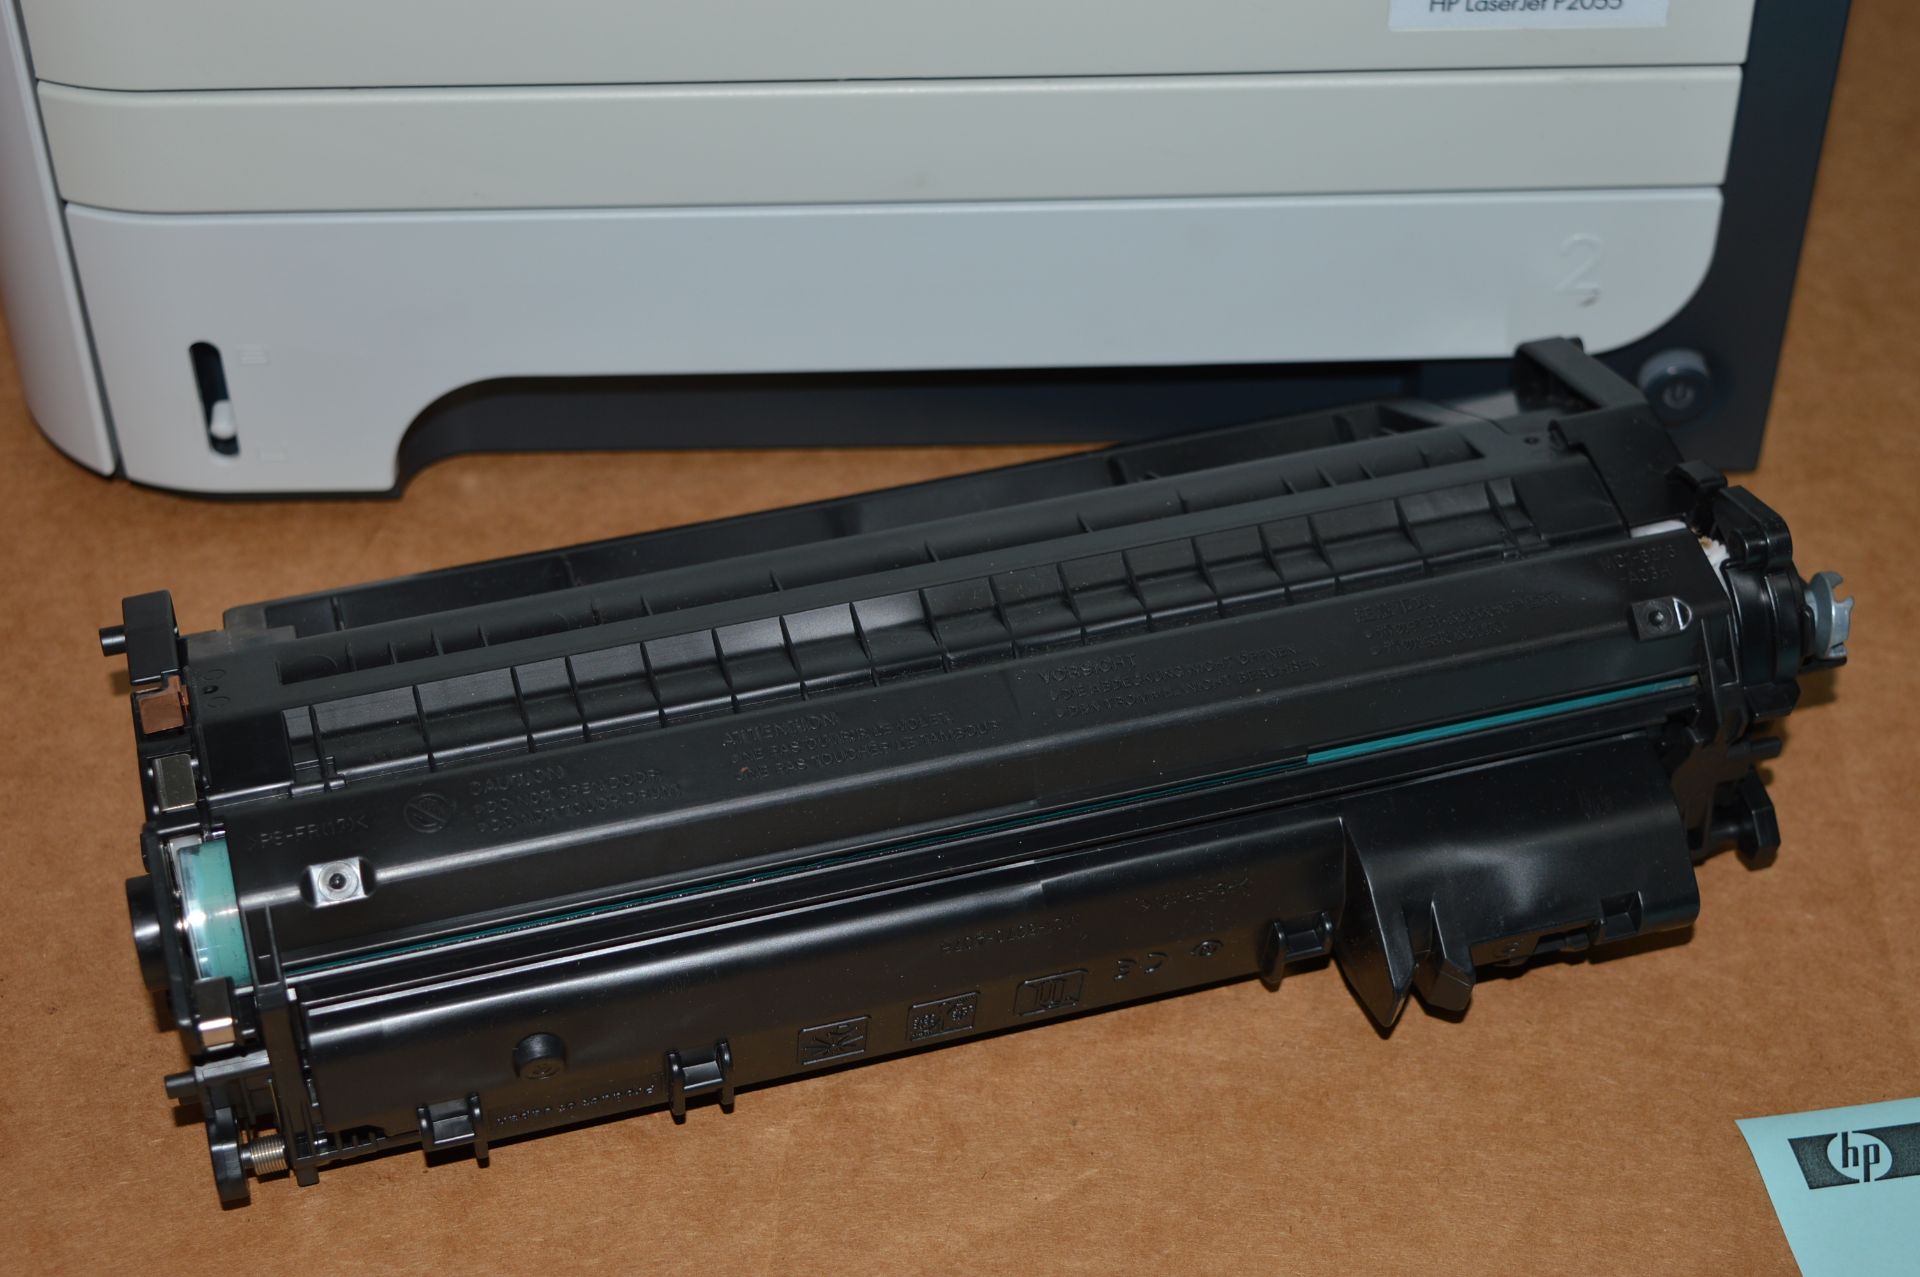 1 x HP Laserjet P2055 Desktop Laser Printer - Good Working Order - Includes Two Toners - CL010 - Ref - Image 9 of 9